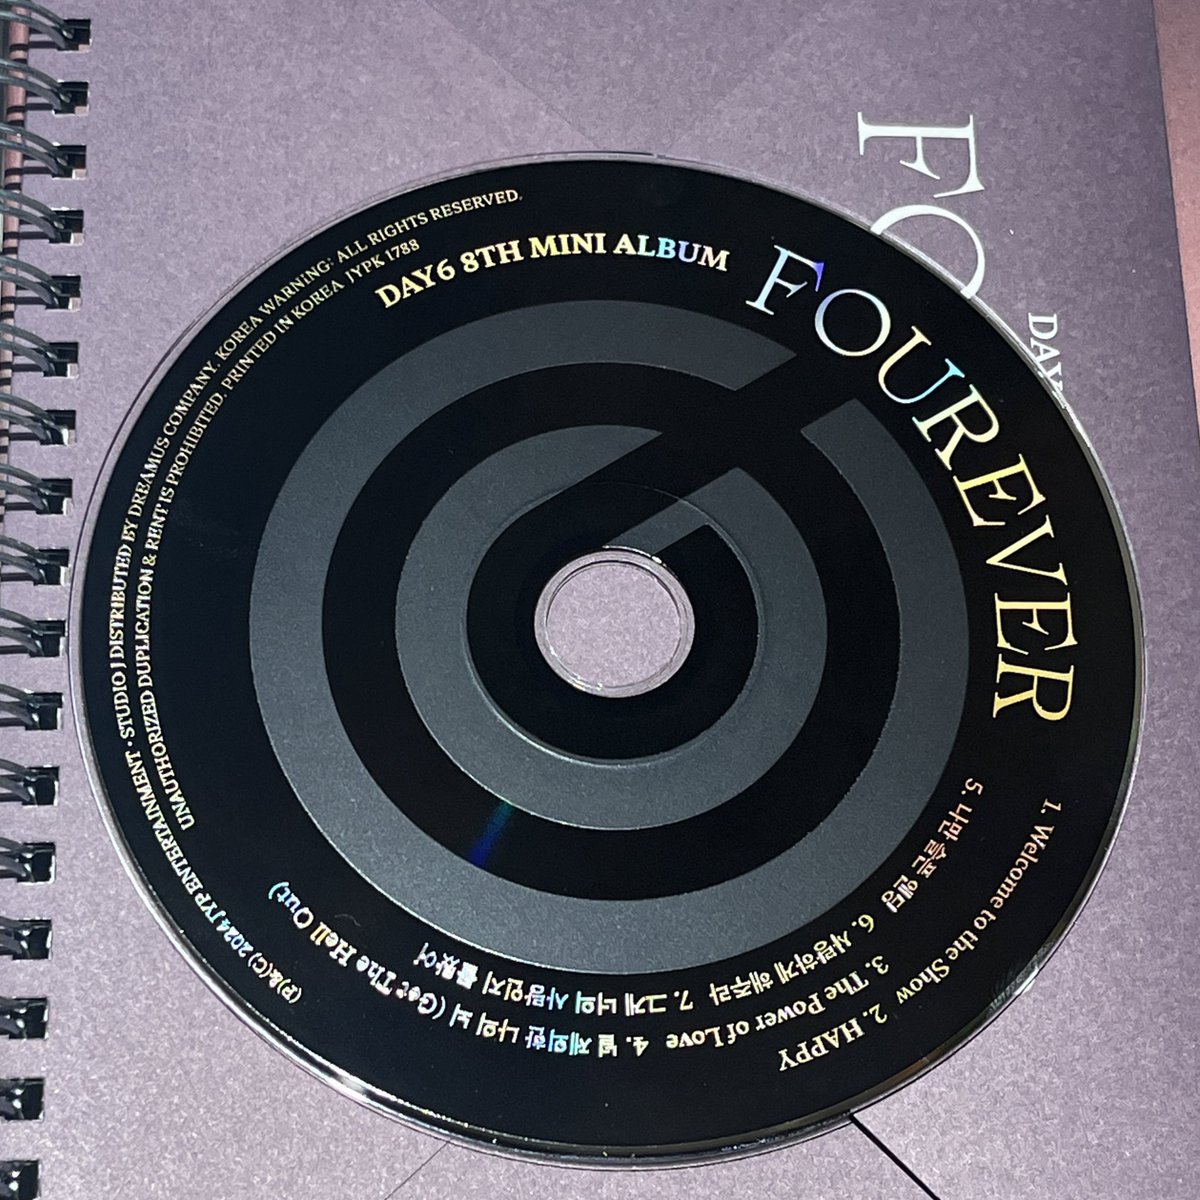 Fourever cd has Day6 logo on it 😭😭